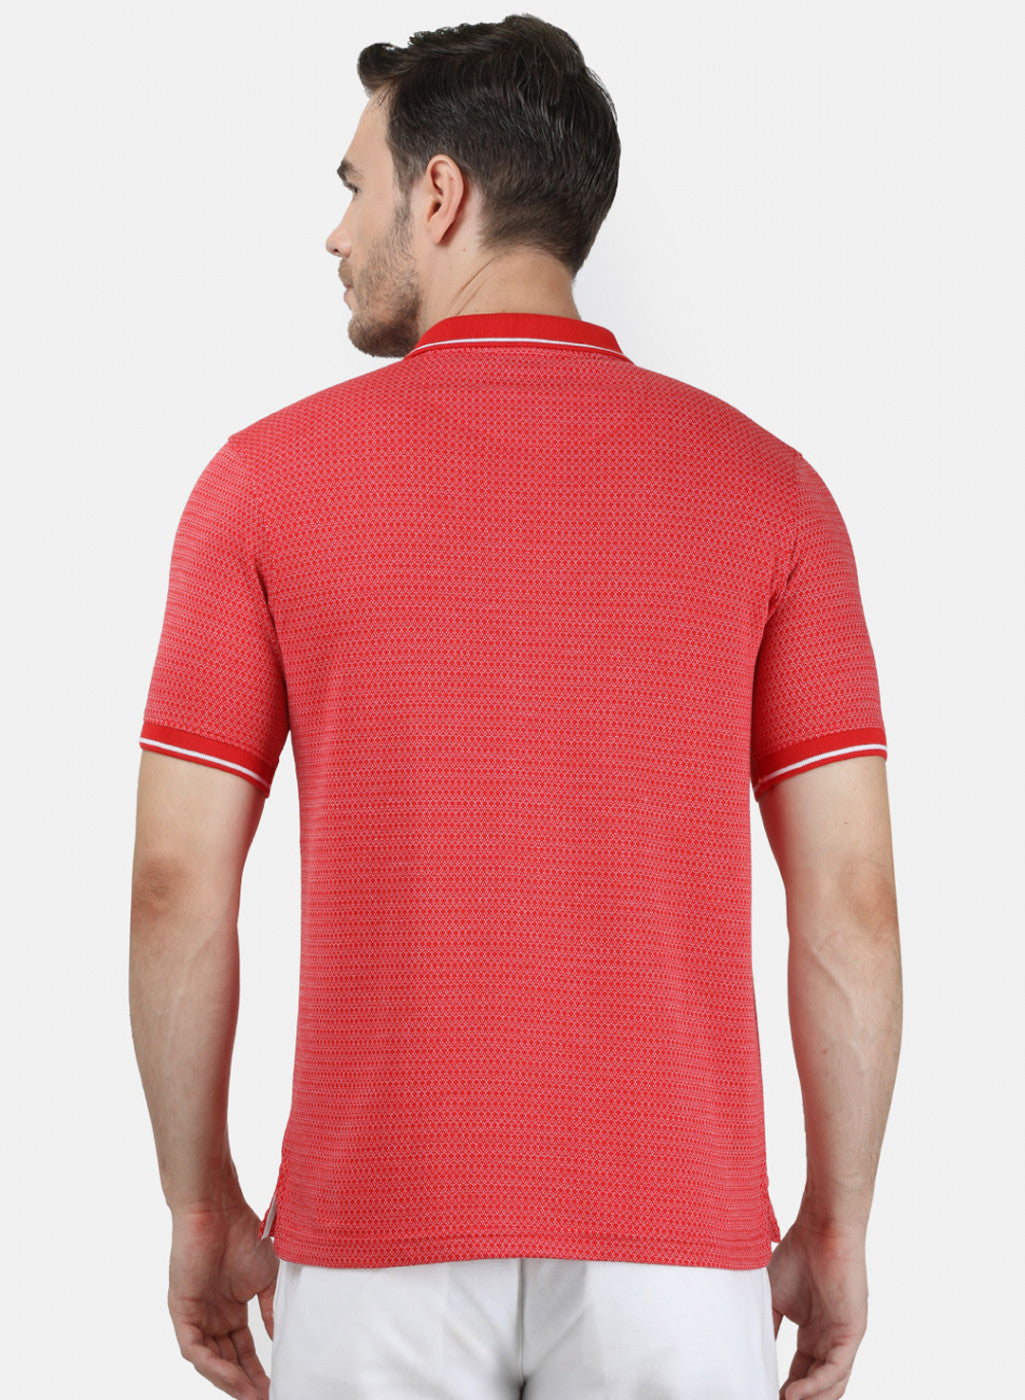 Mens Red Jaquard T-Shirt